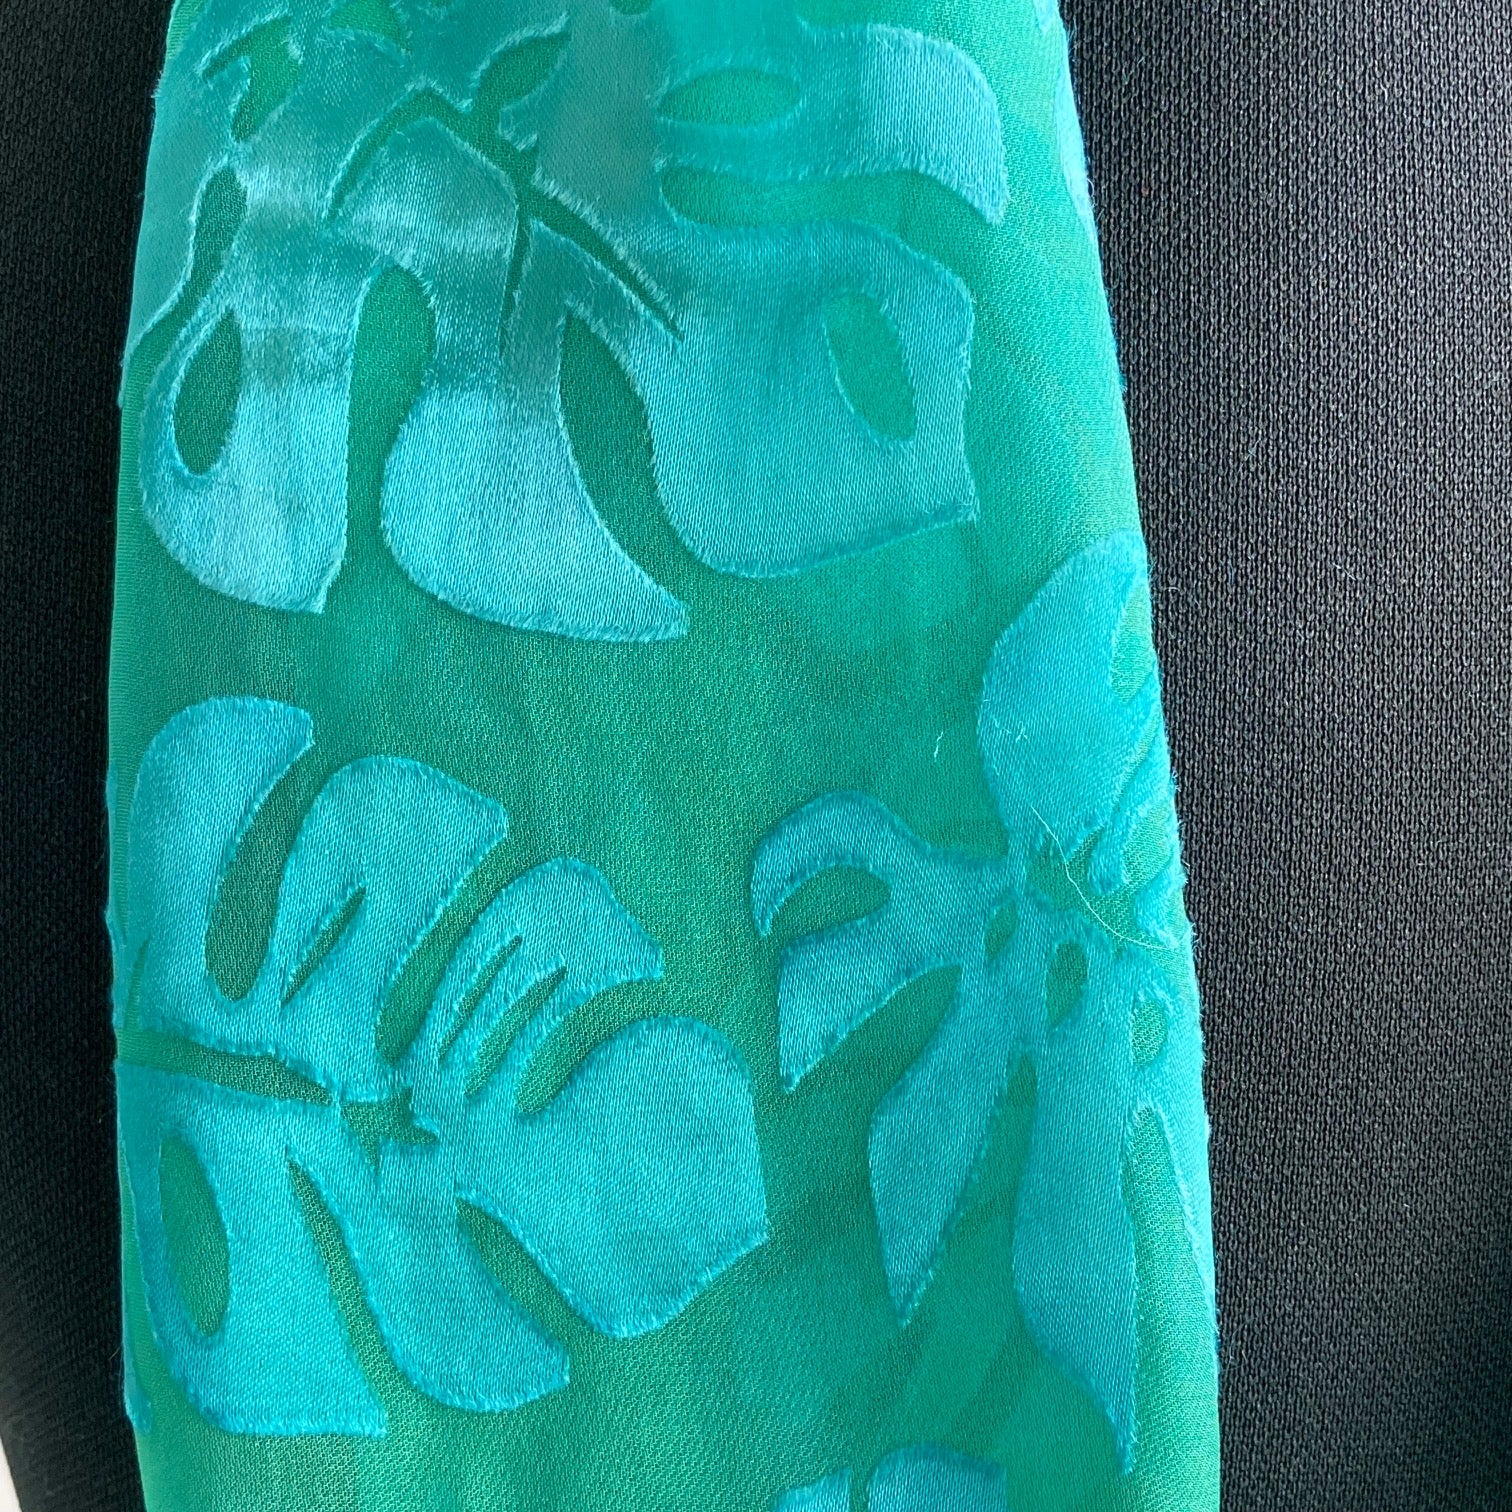 Devore Silk & Rayon Scarf in Jade in the Monstera Design